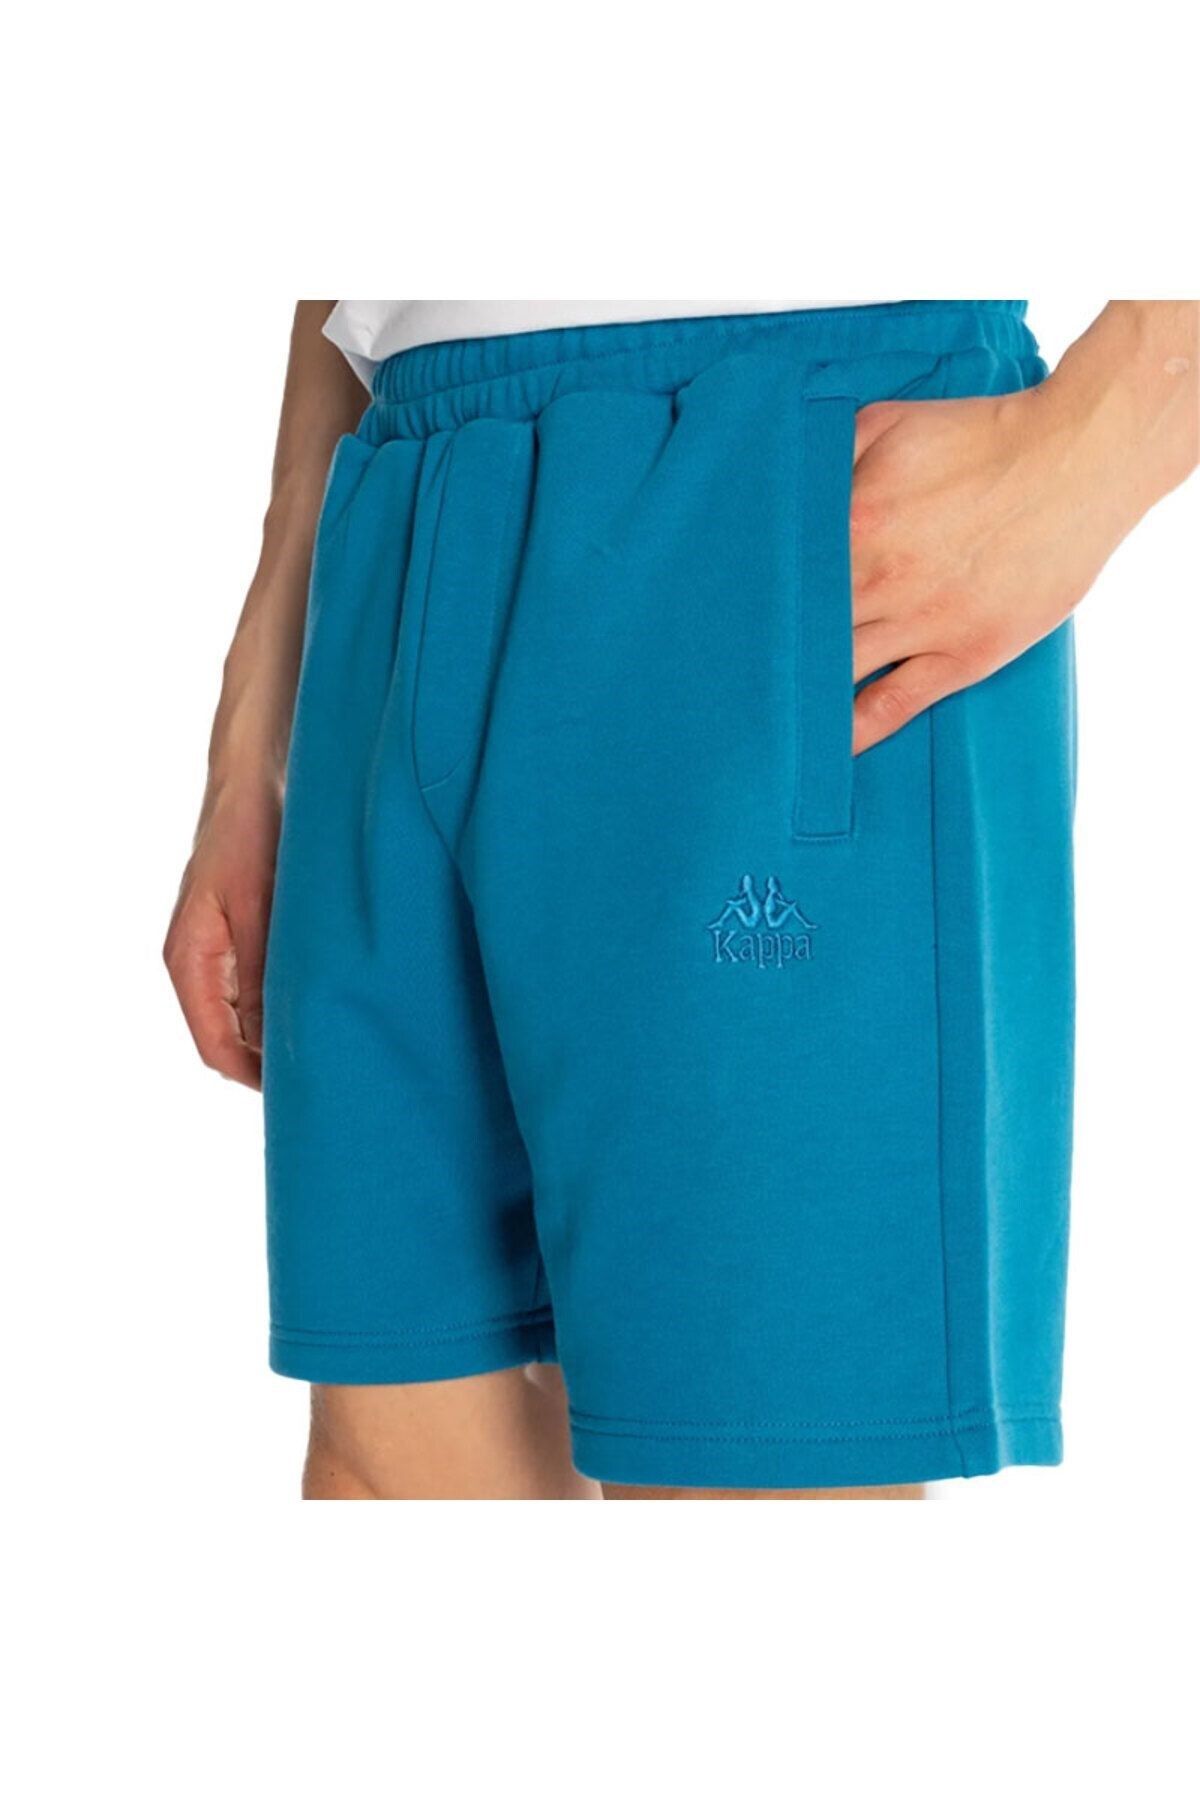 Kappa Authentıc Elı Man Blue Turquoıse Shorts 351t11w-798